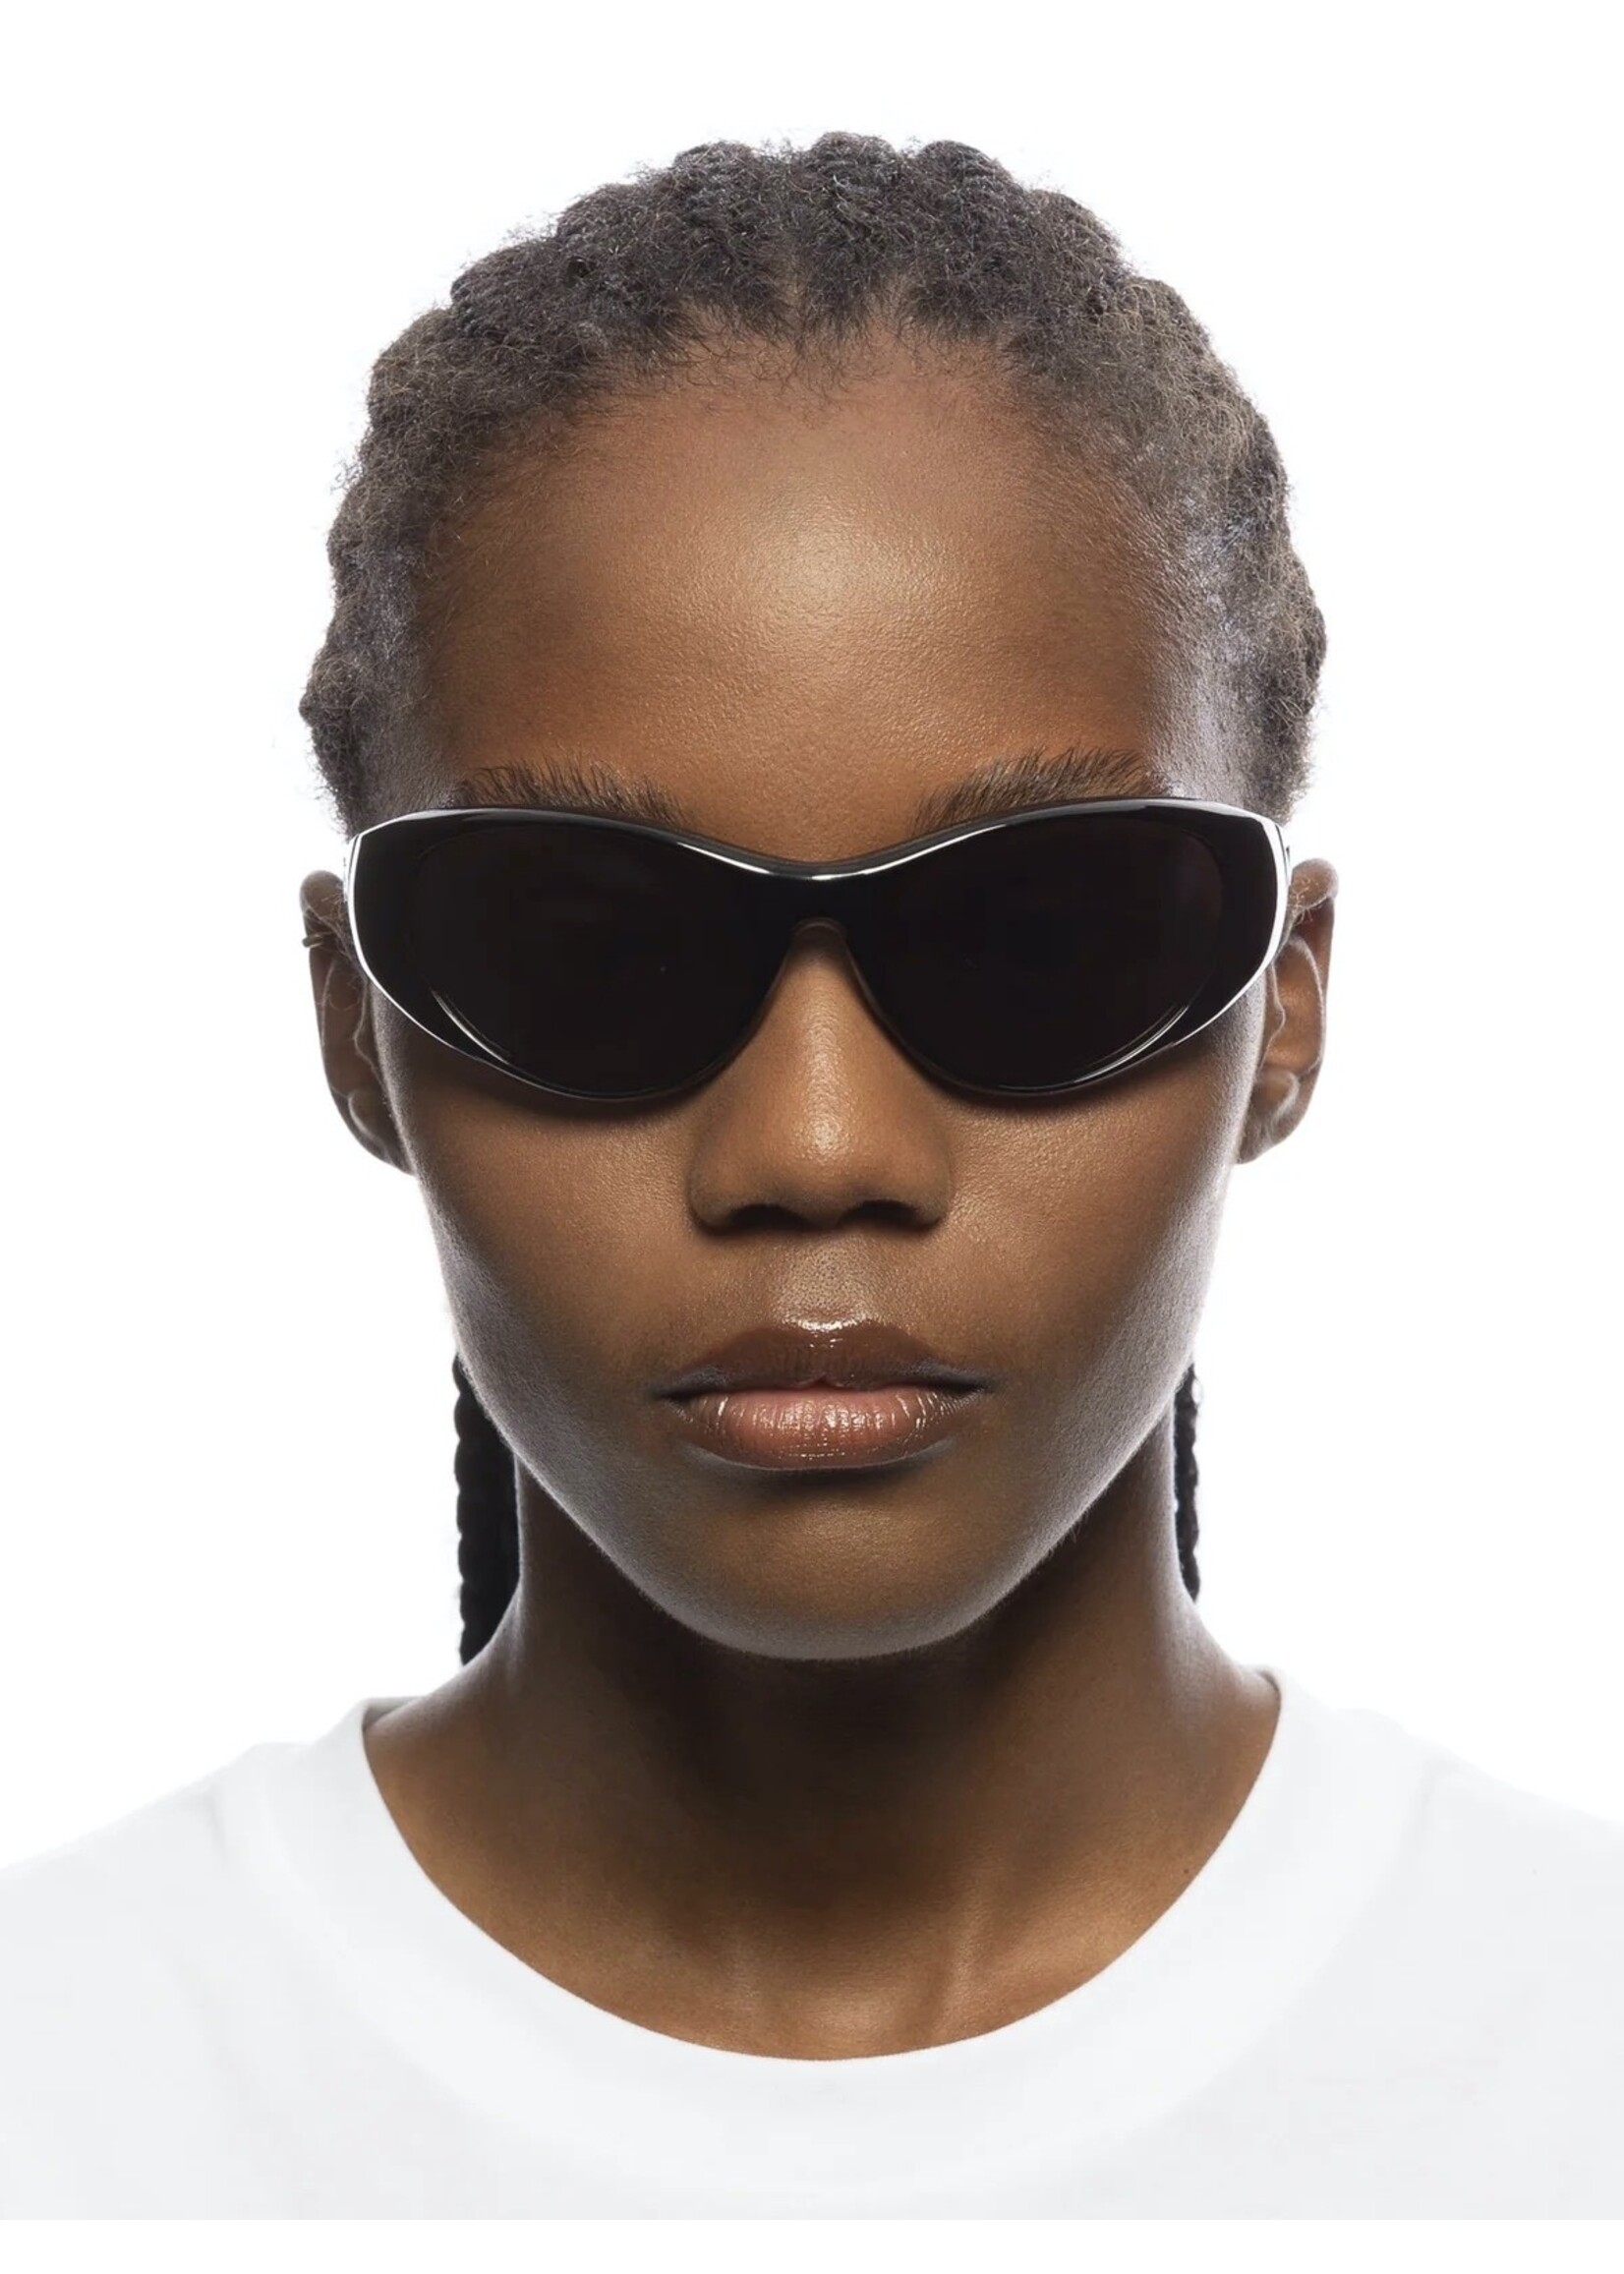 Le Specs Sunglasses "Dotcom" by LESPECS